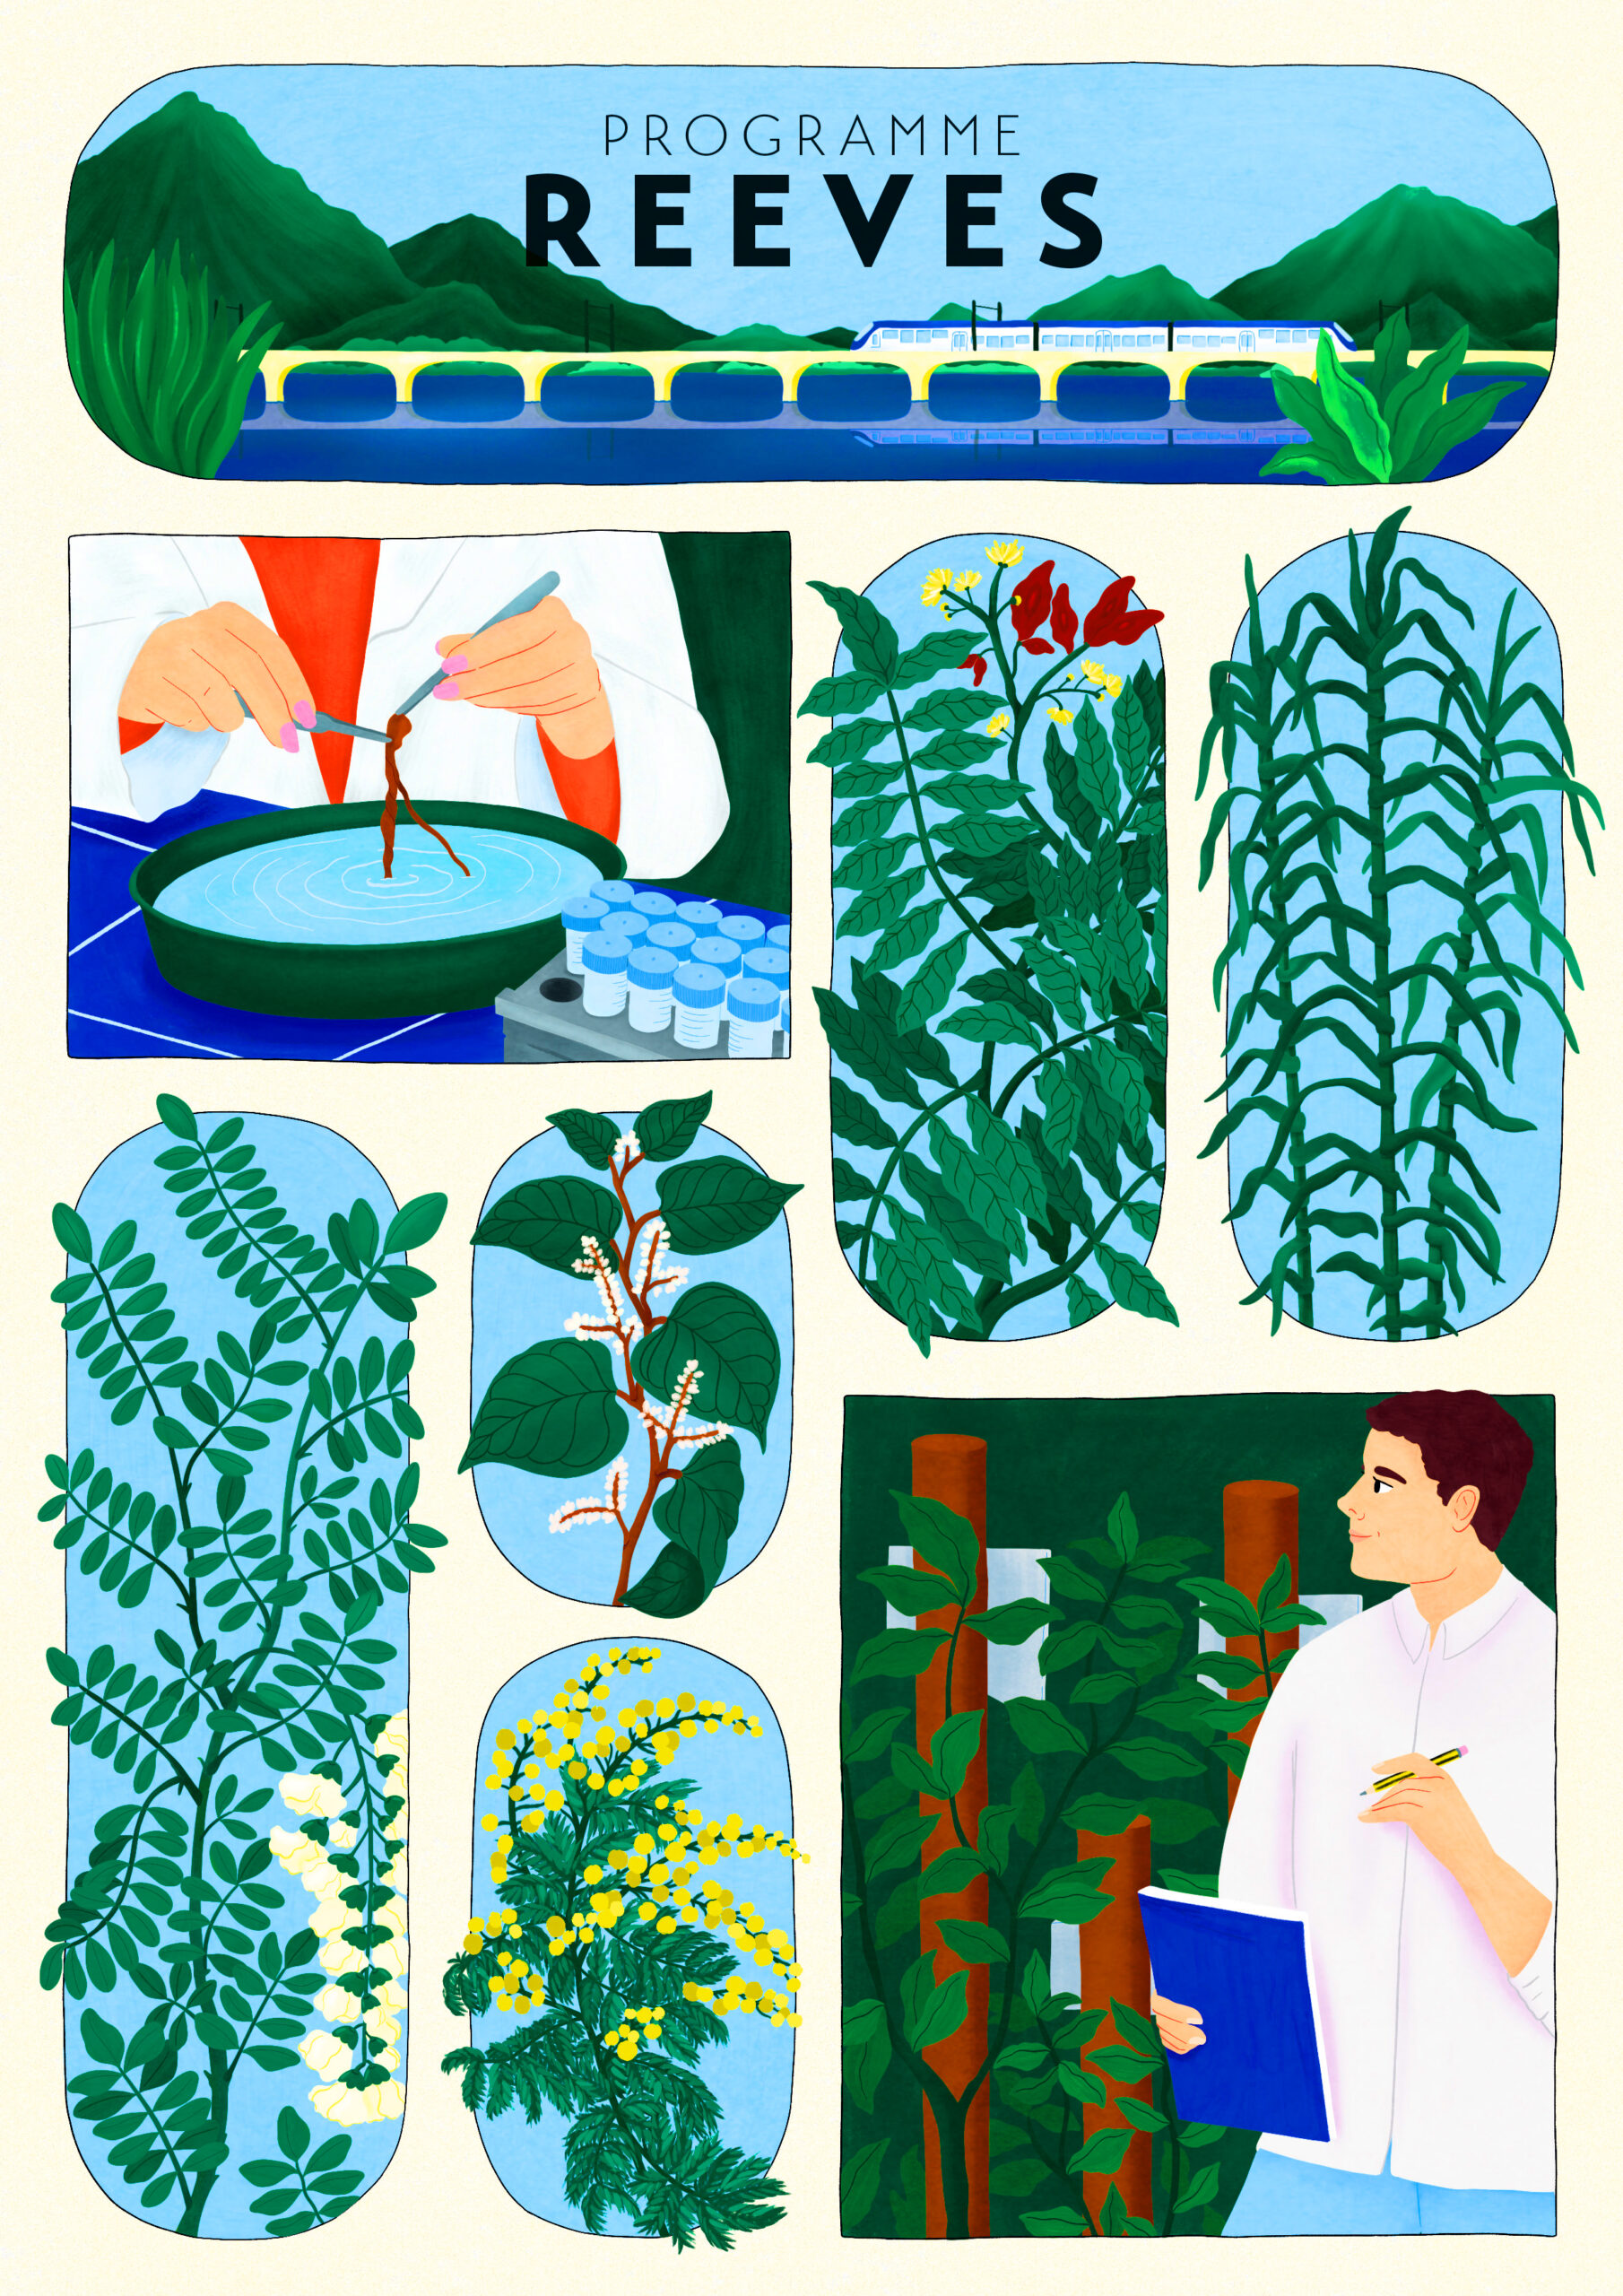 Marie Pellet - Illustration - graphic design - portfolio - 2023 - SNCF - Programme REEVES - Botanique